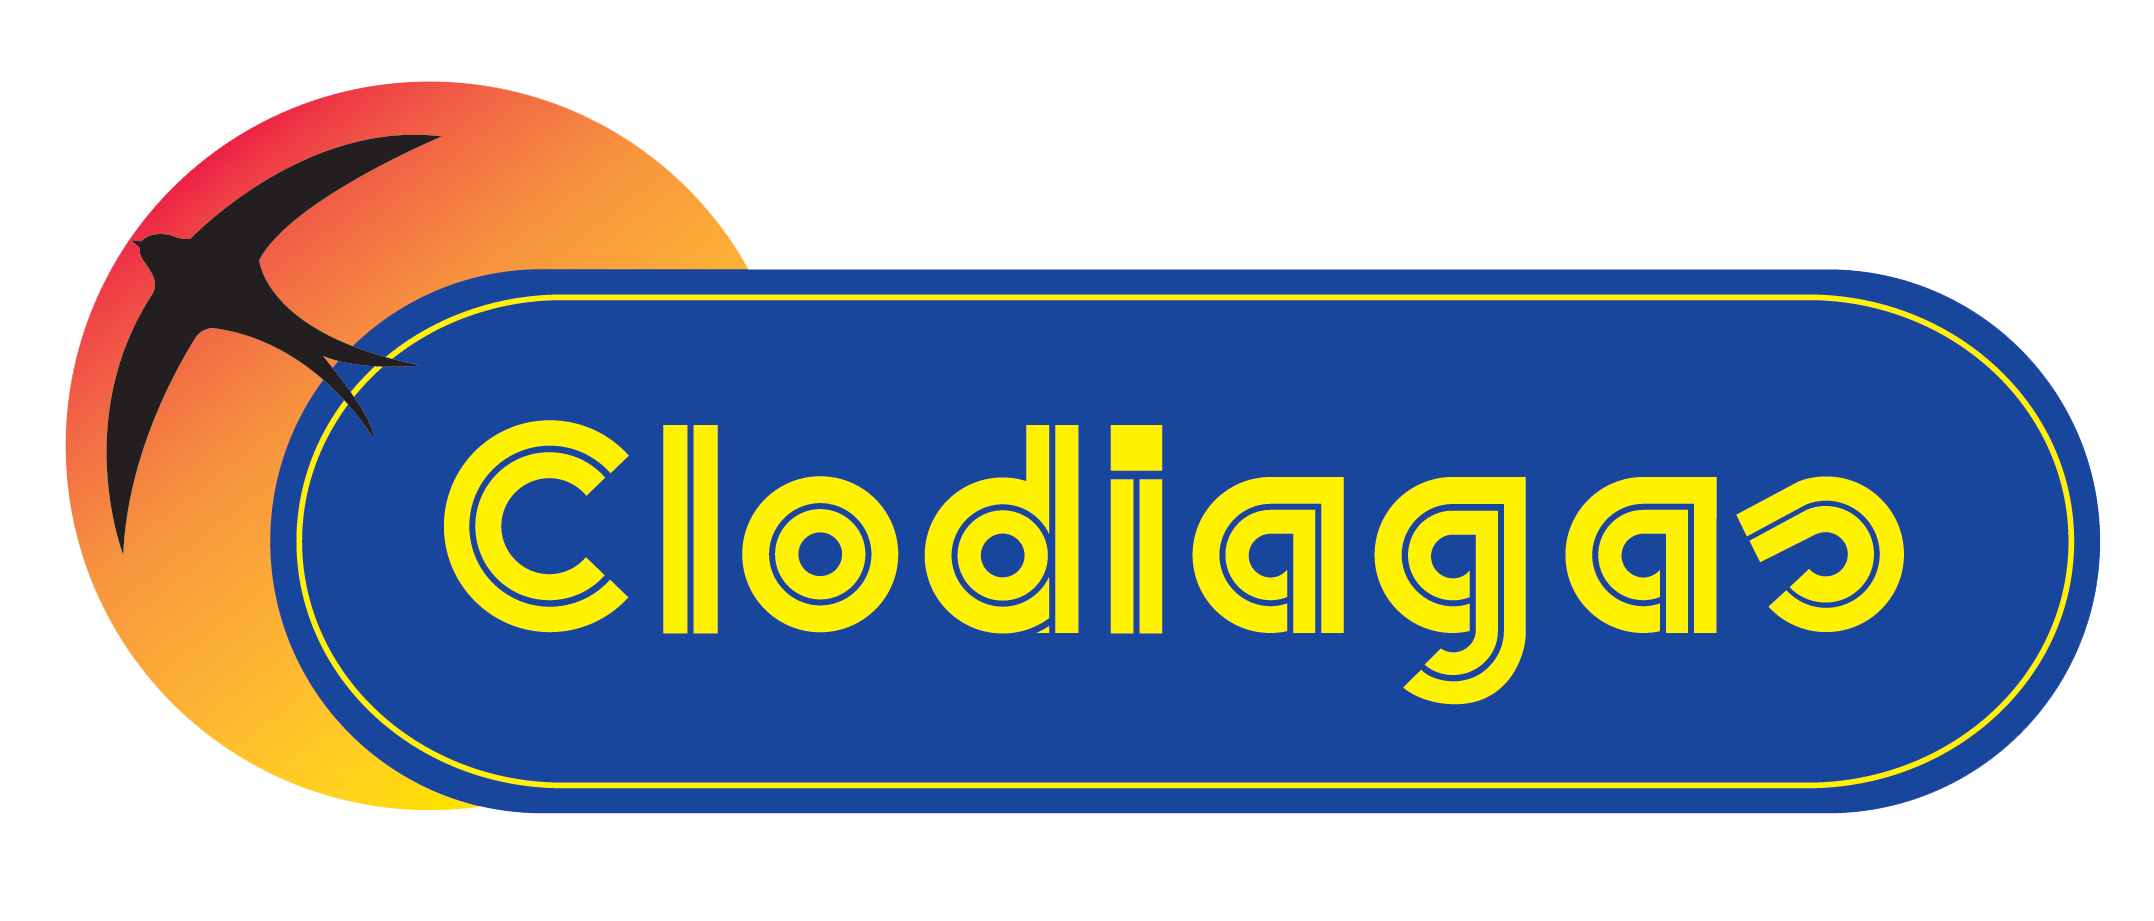 Clodiagas